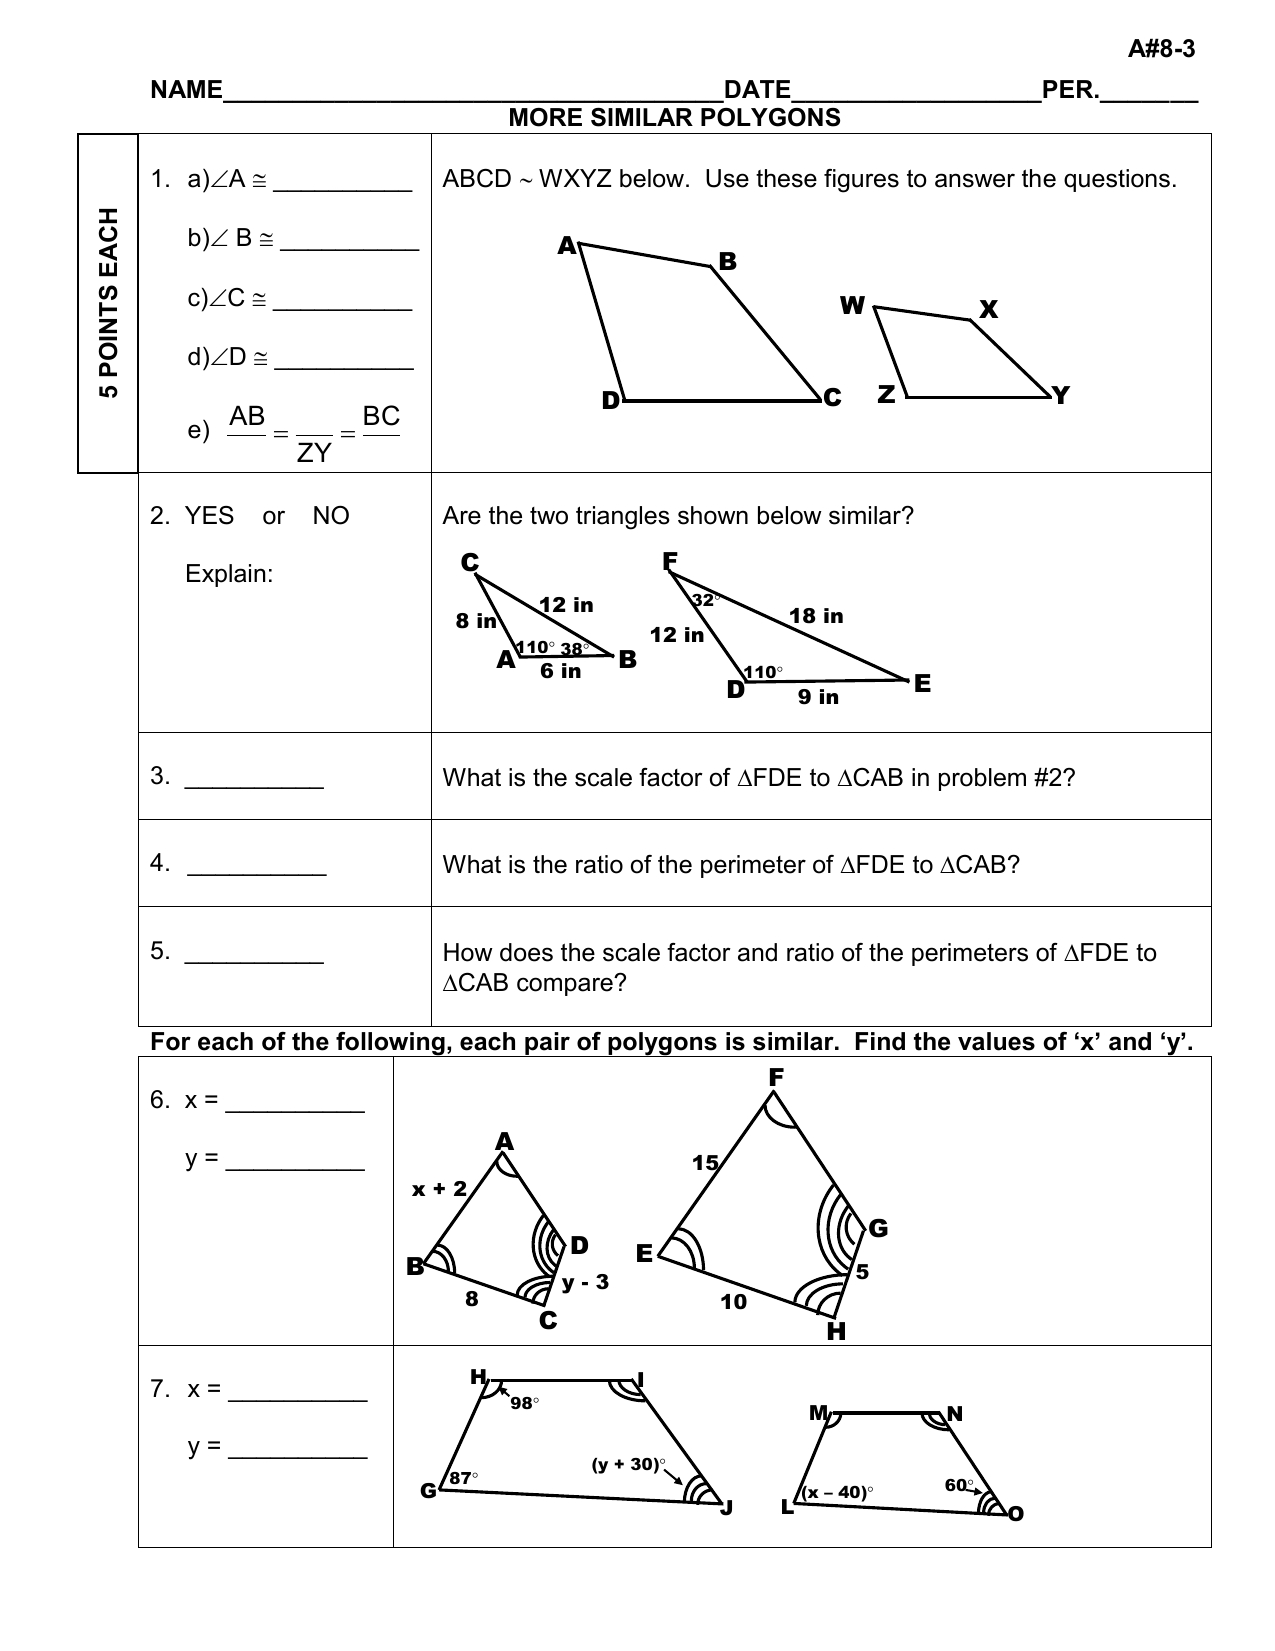 More Similar Polygons For Similar Polygons Worksheet Answer Key